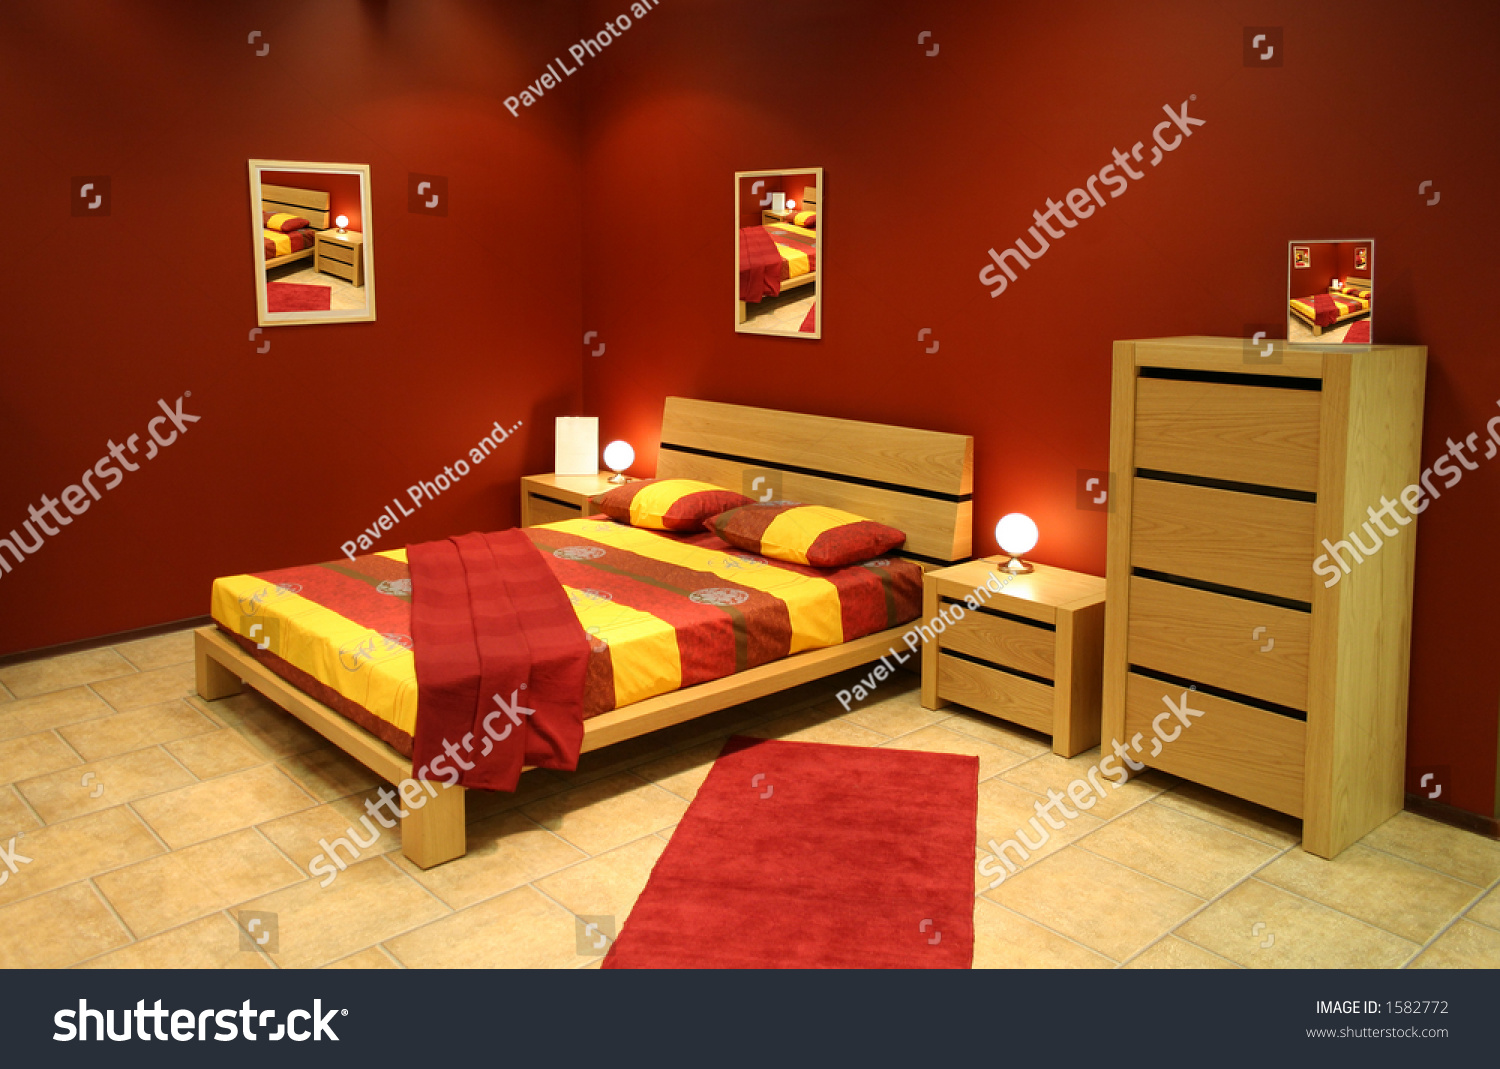 Red Modern Bedroom Stock Photo 1582772 - Shutterstock